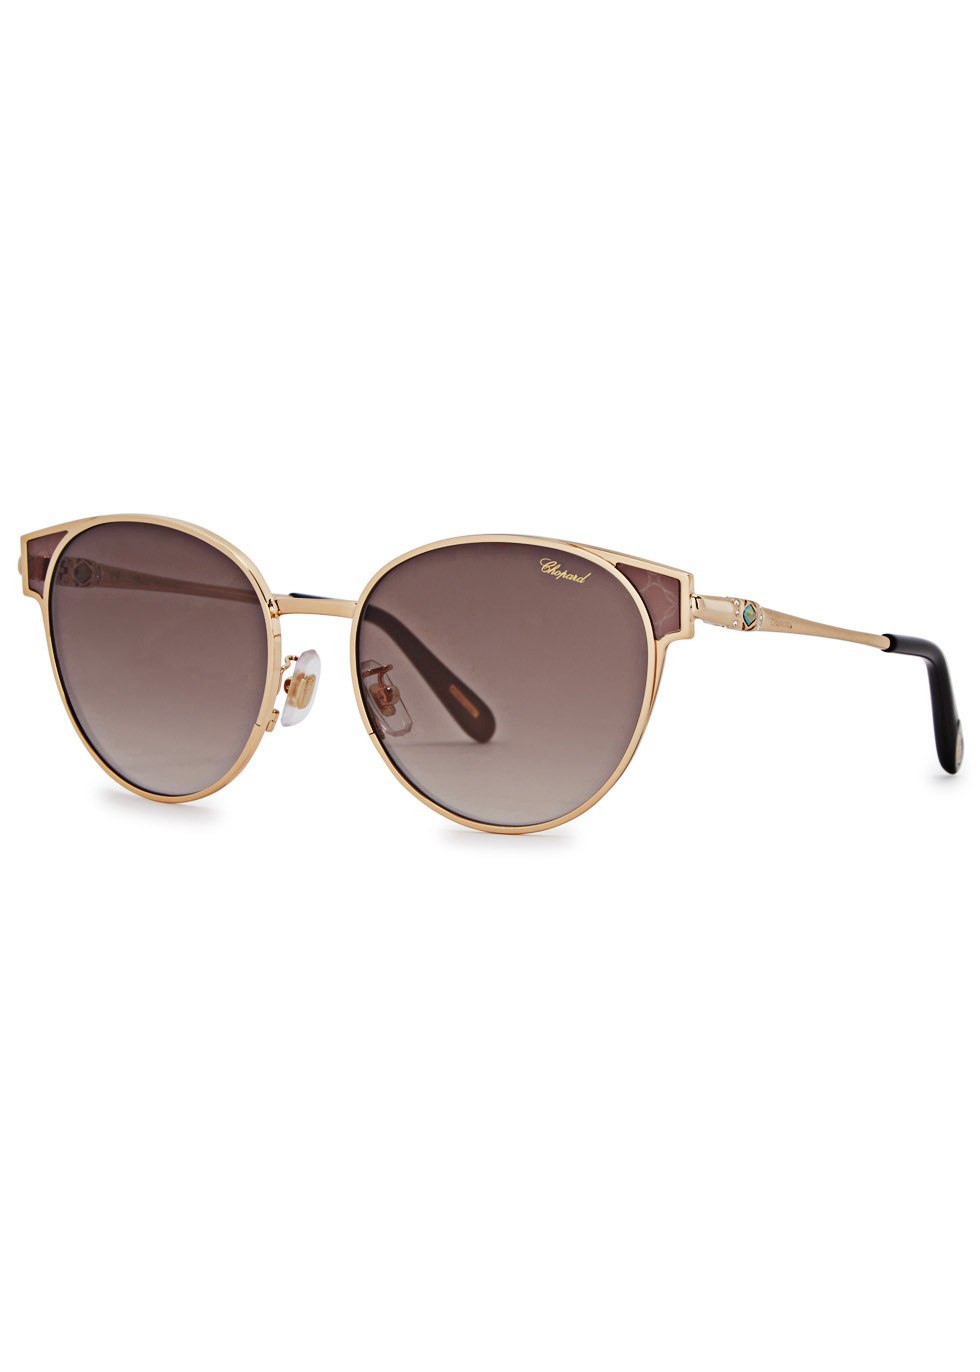 Chopard Rose gold aviator-style sunglasses - Harvey Nichols